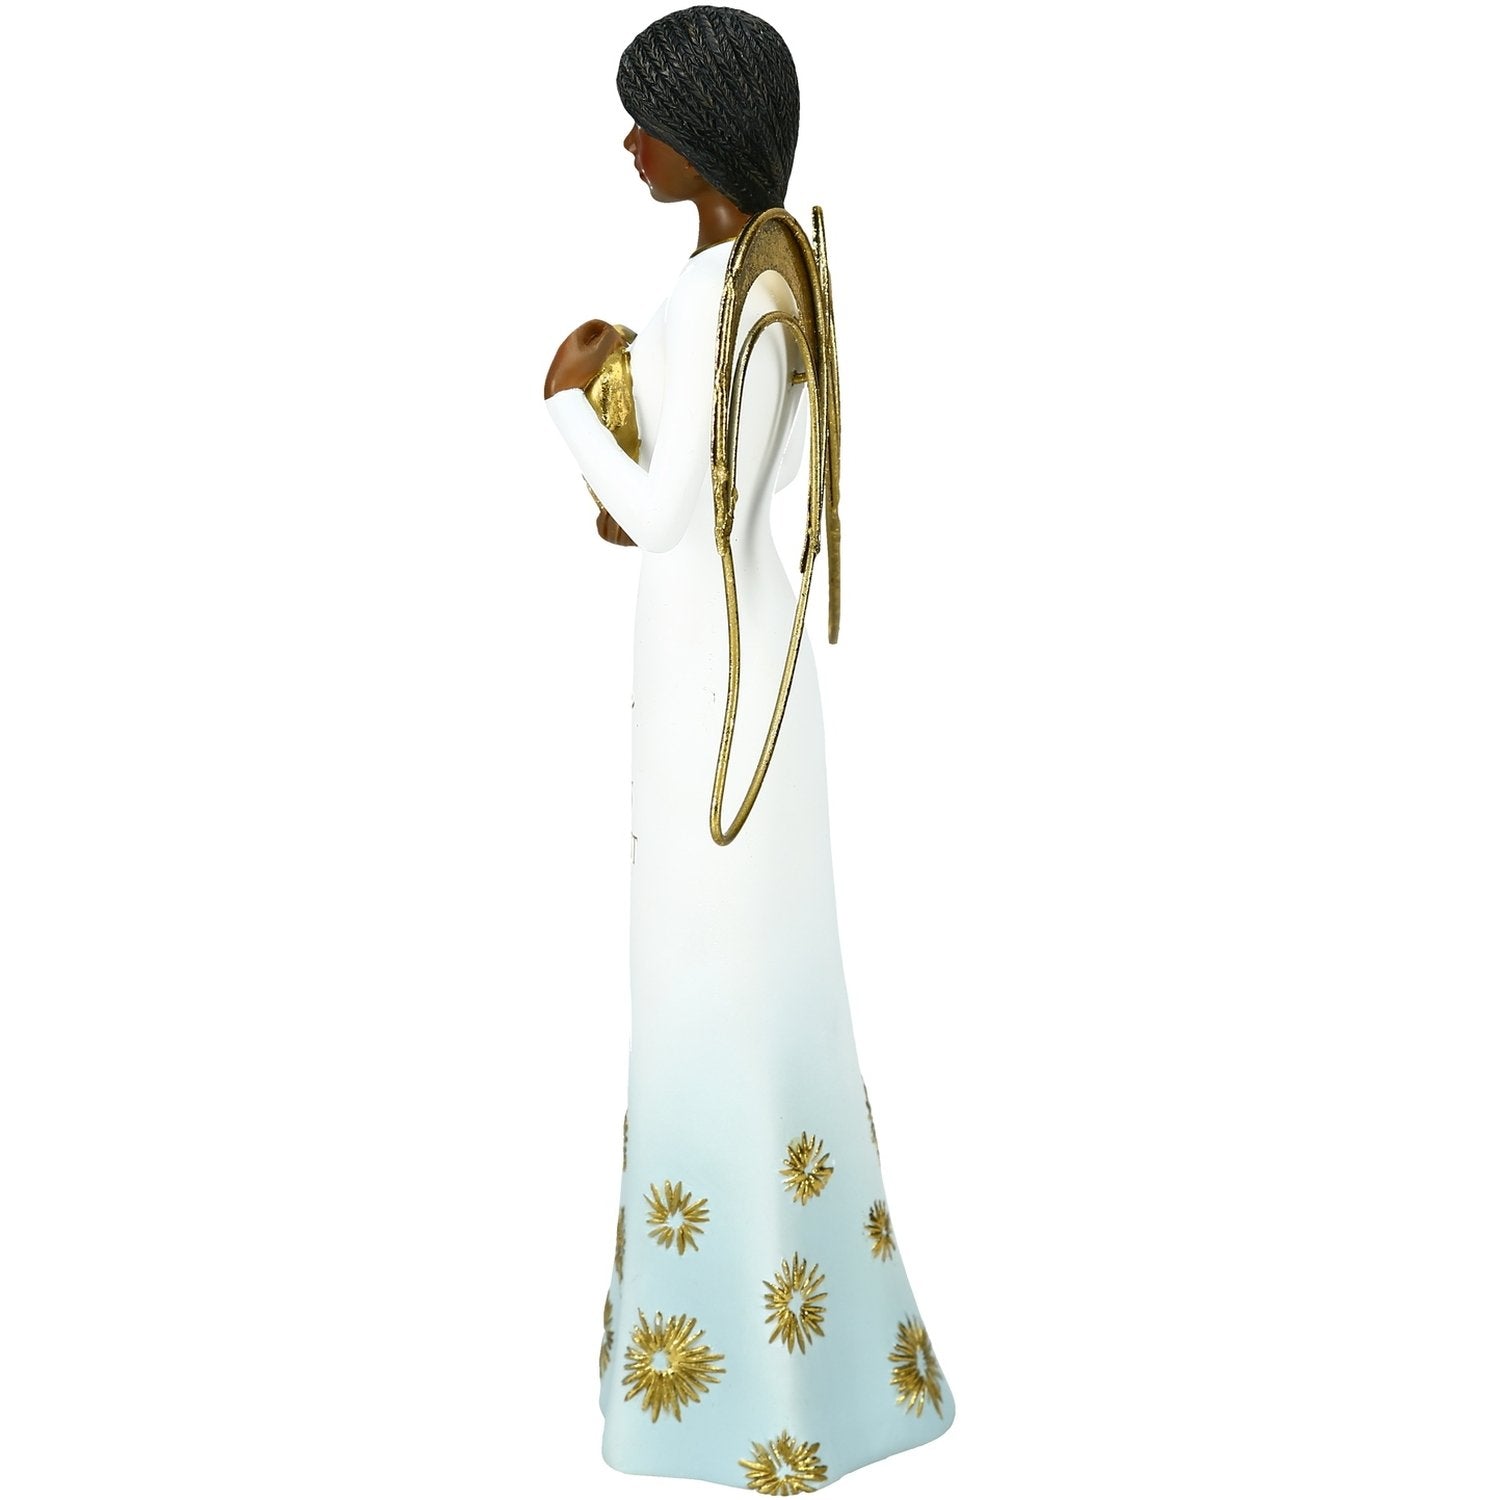 3 of 6: To Be Loved Angel by Amylee Weeks: African American Figurine